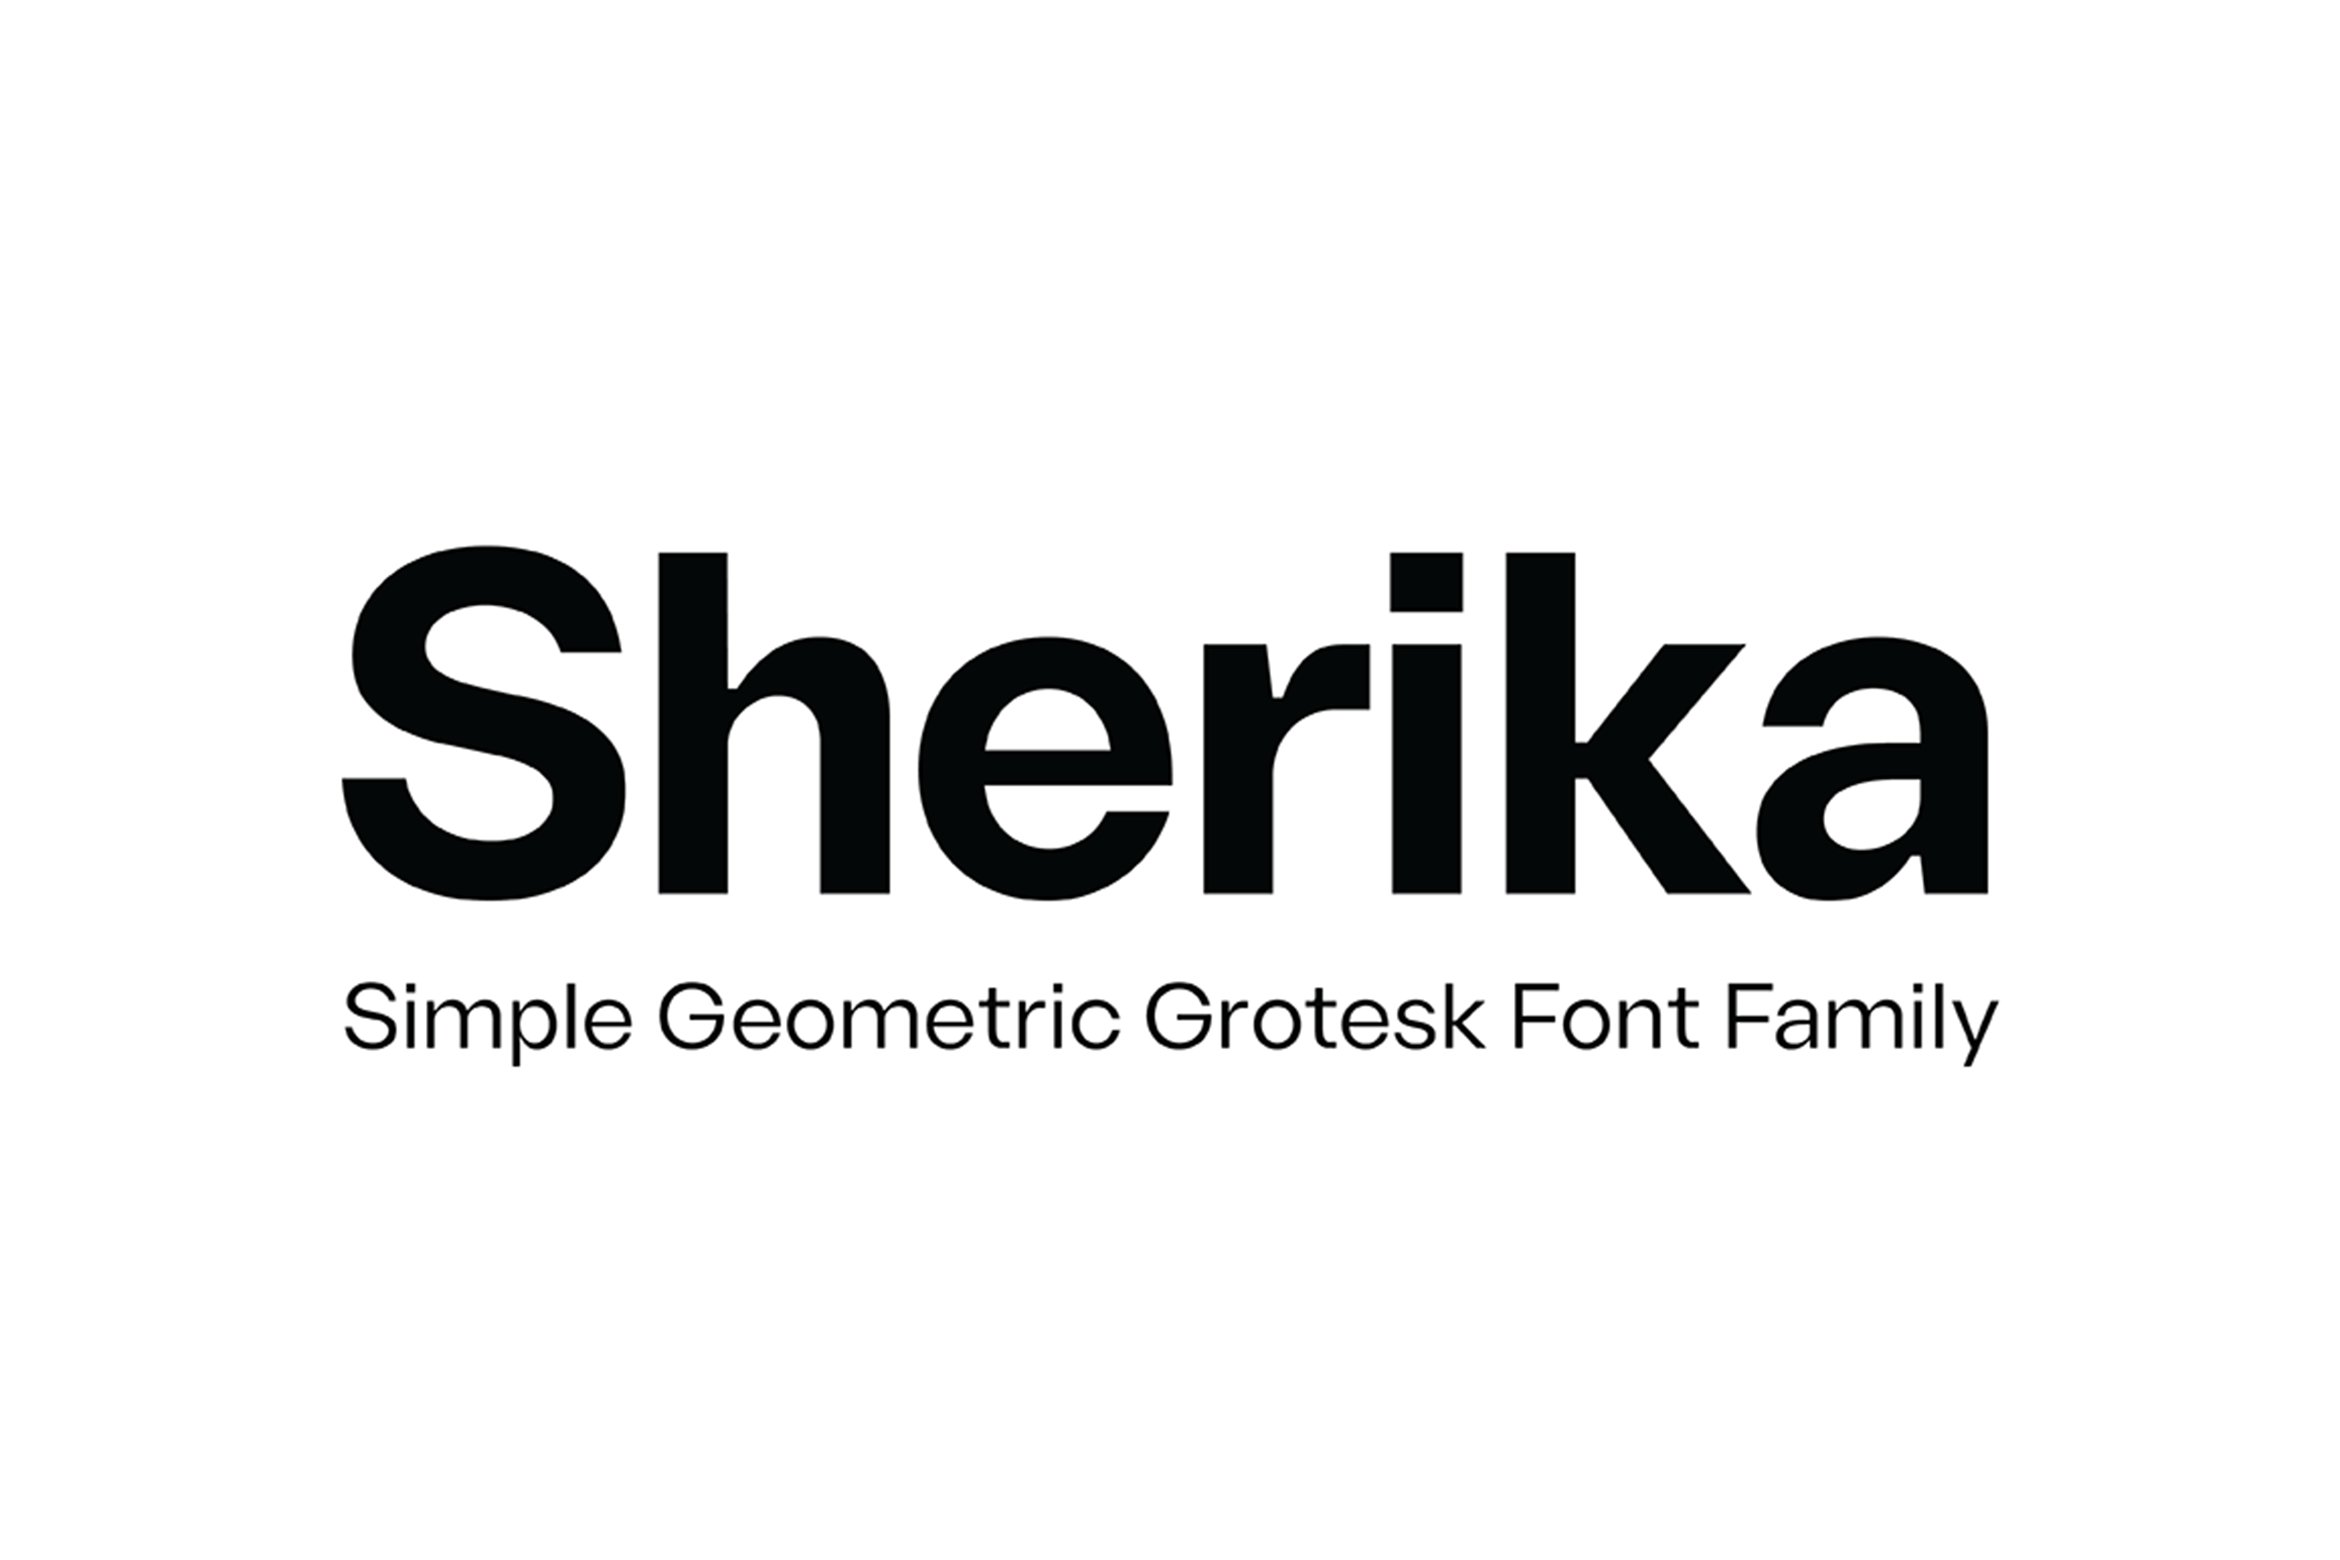 Sherika Font Family cover image.